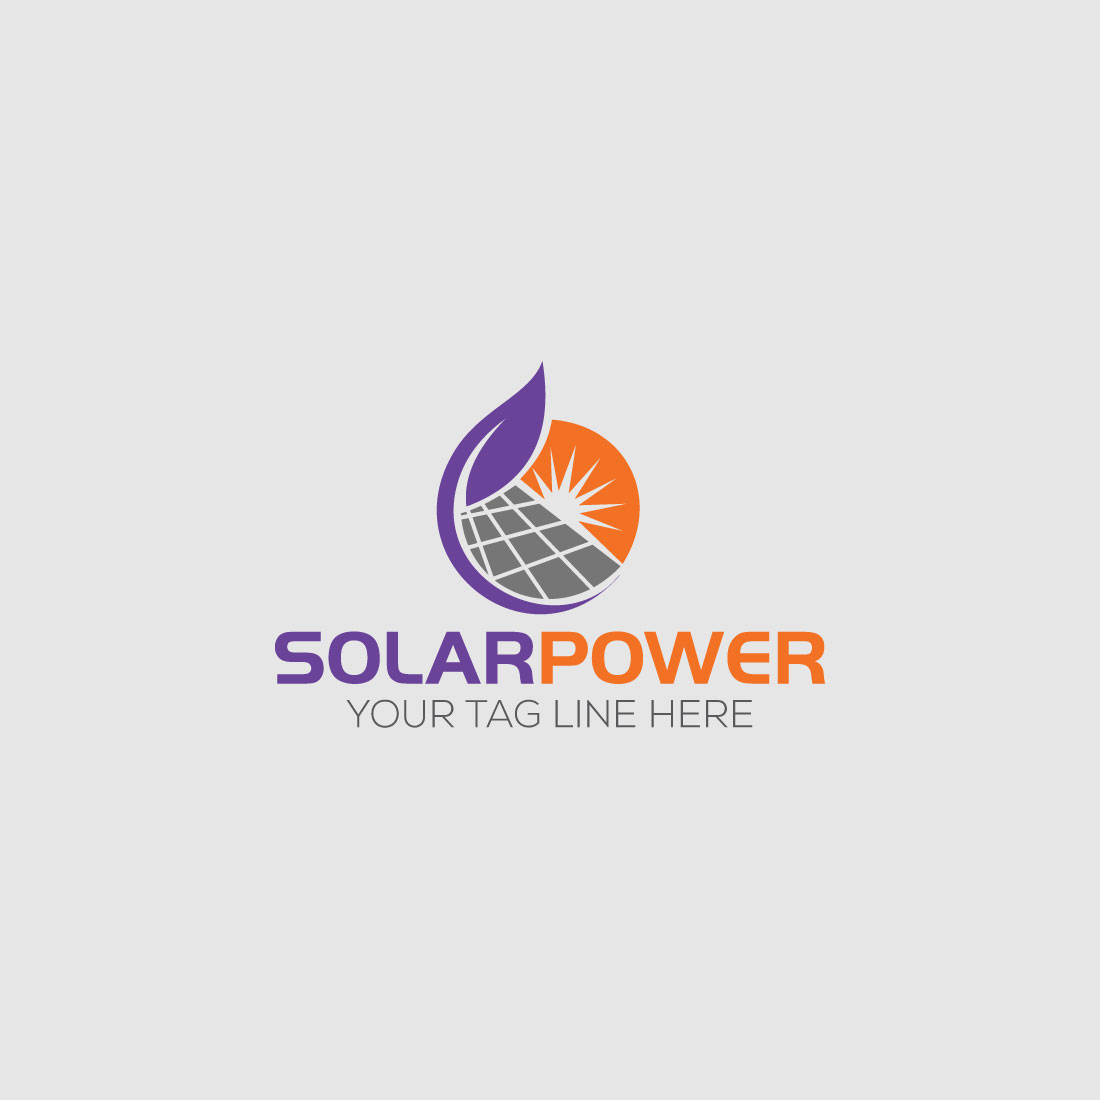 Solar Power Energy Logo Template cover image.